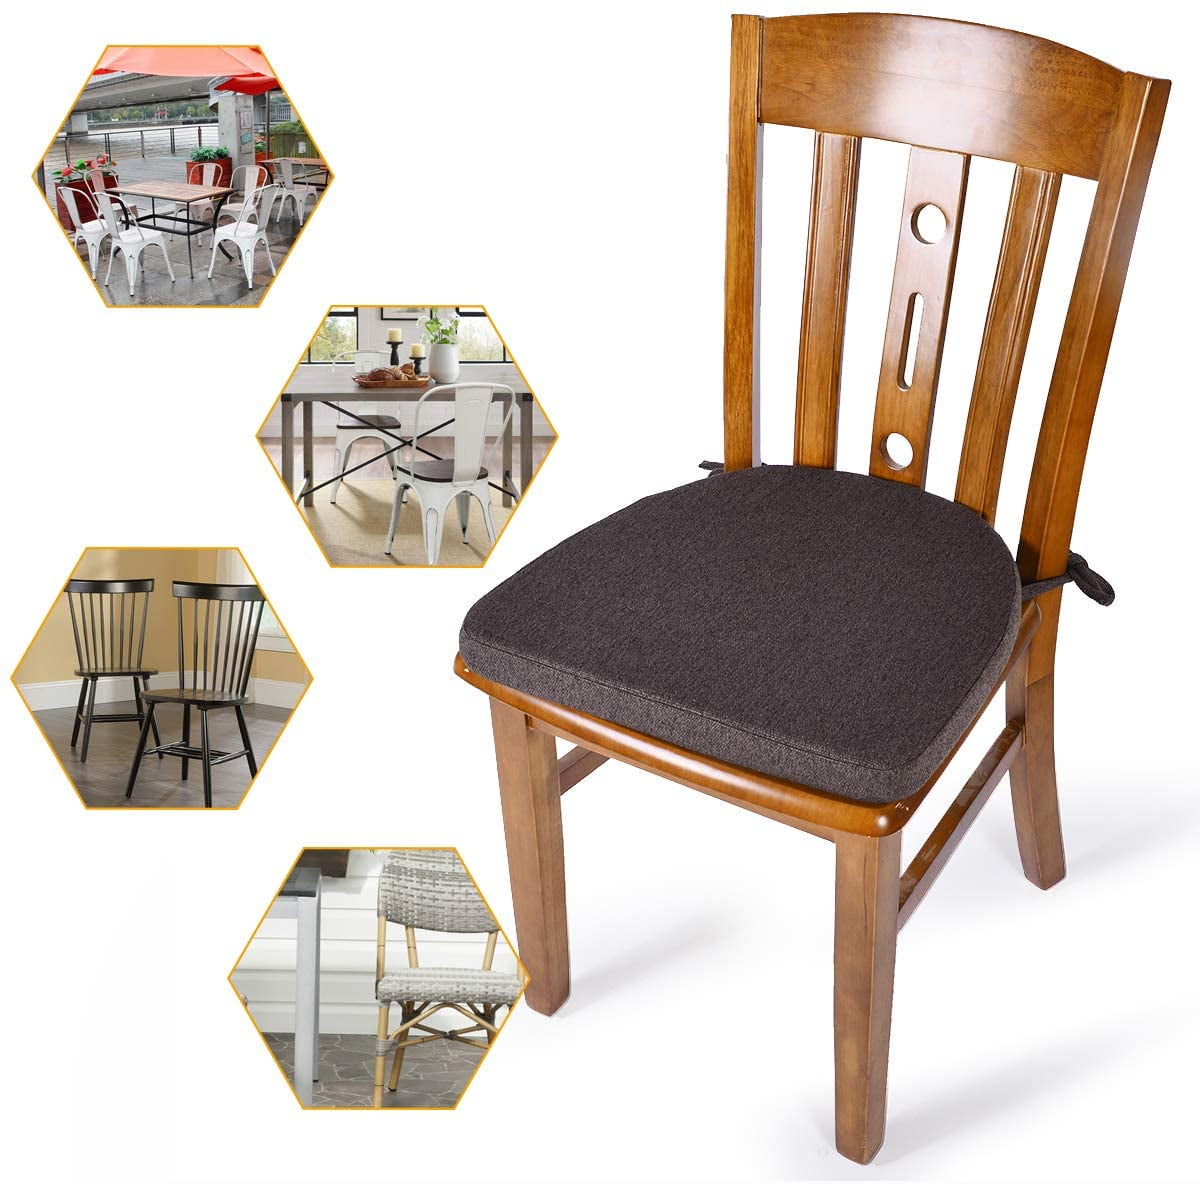 Hayden Beige Dining Chair Pads - Latex Foam Fill - Reversible